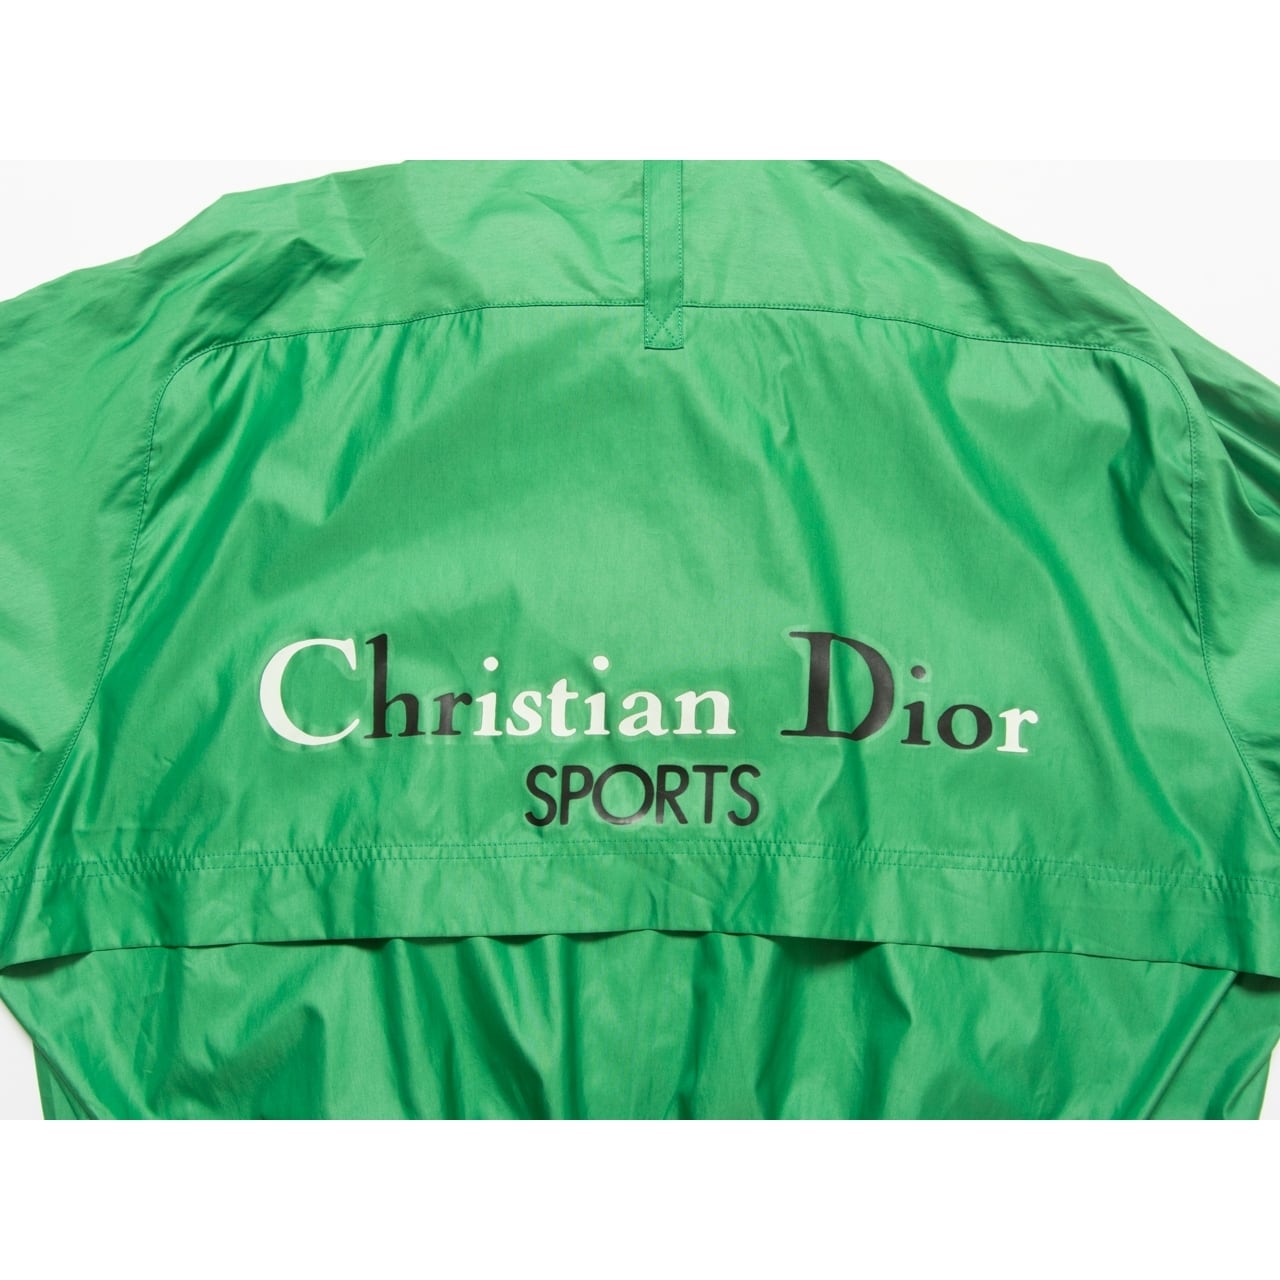 Christian Dior SPORTS ジャケット